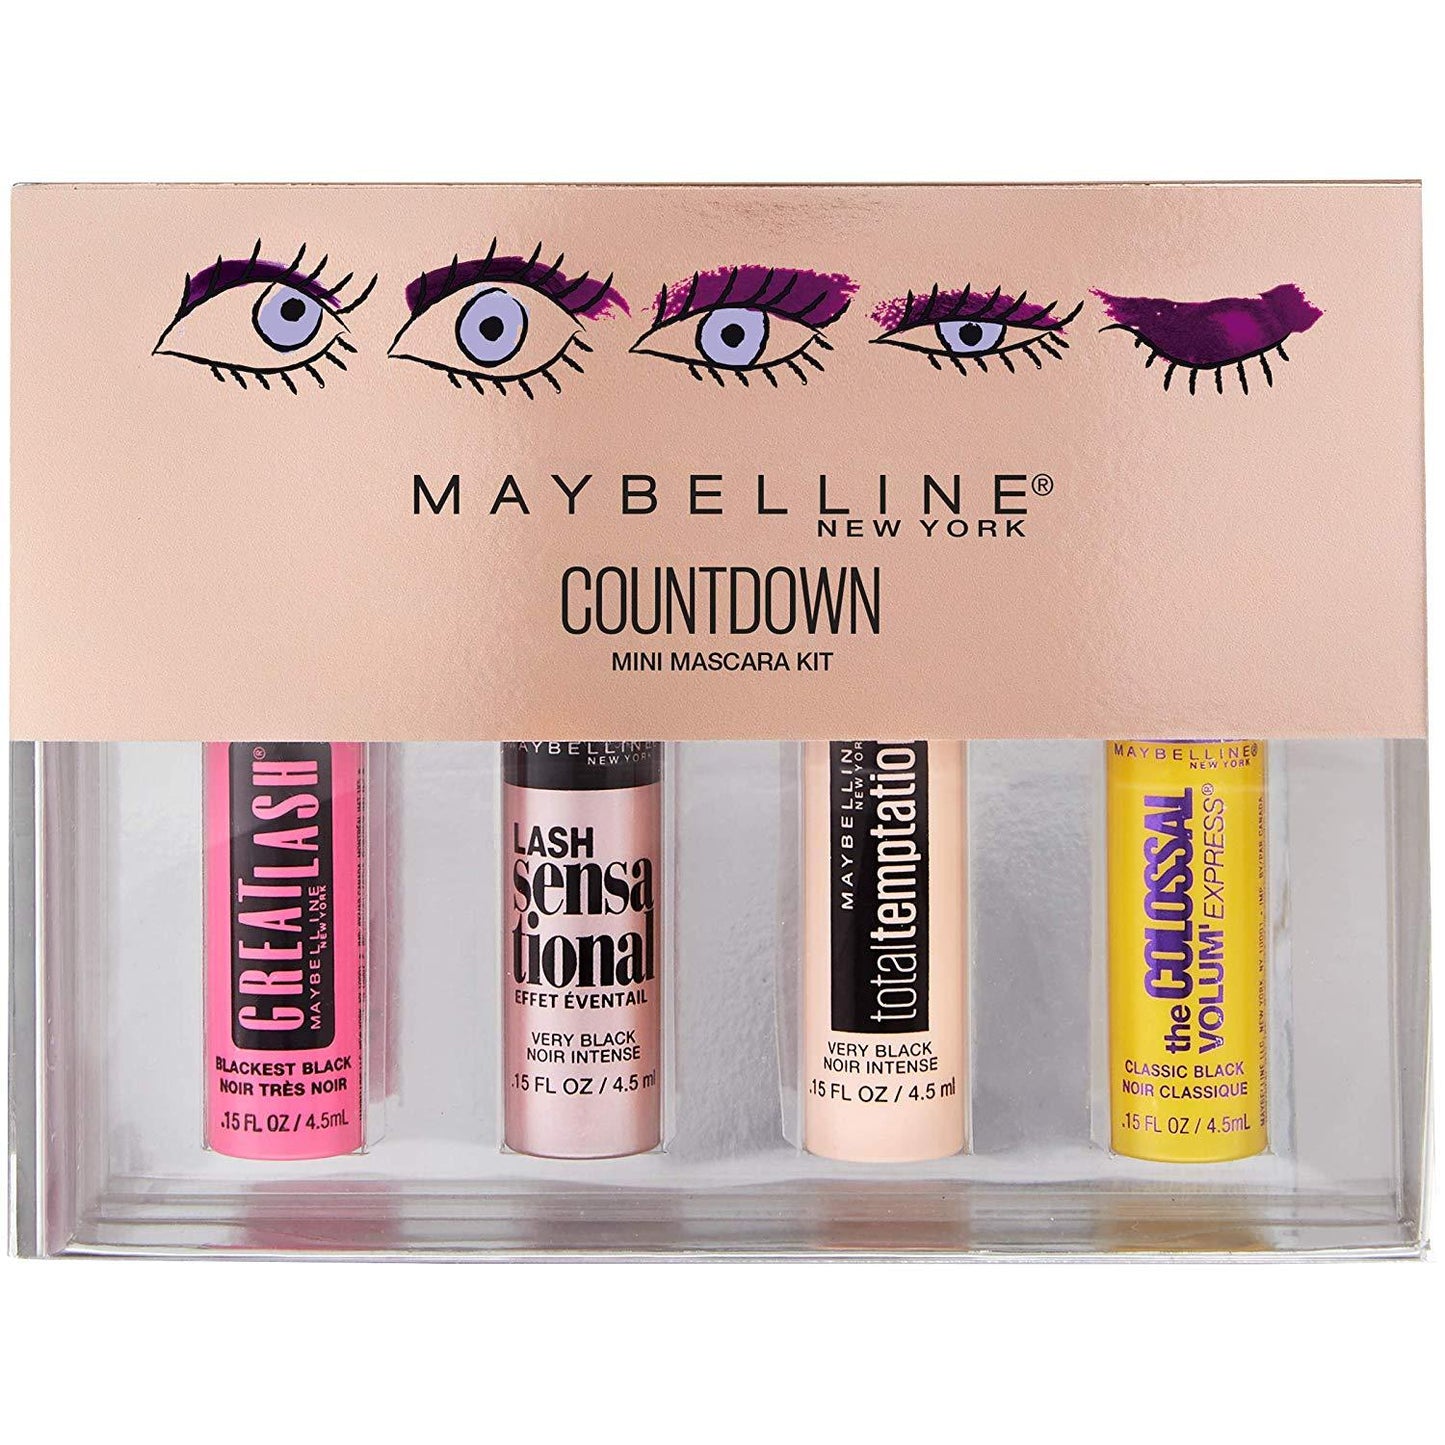 Maybelline Countdown Mini Mascara Kit